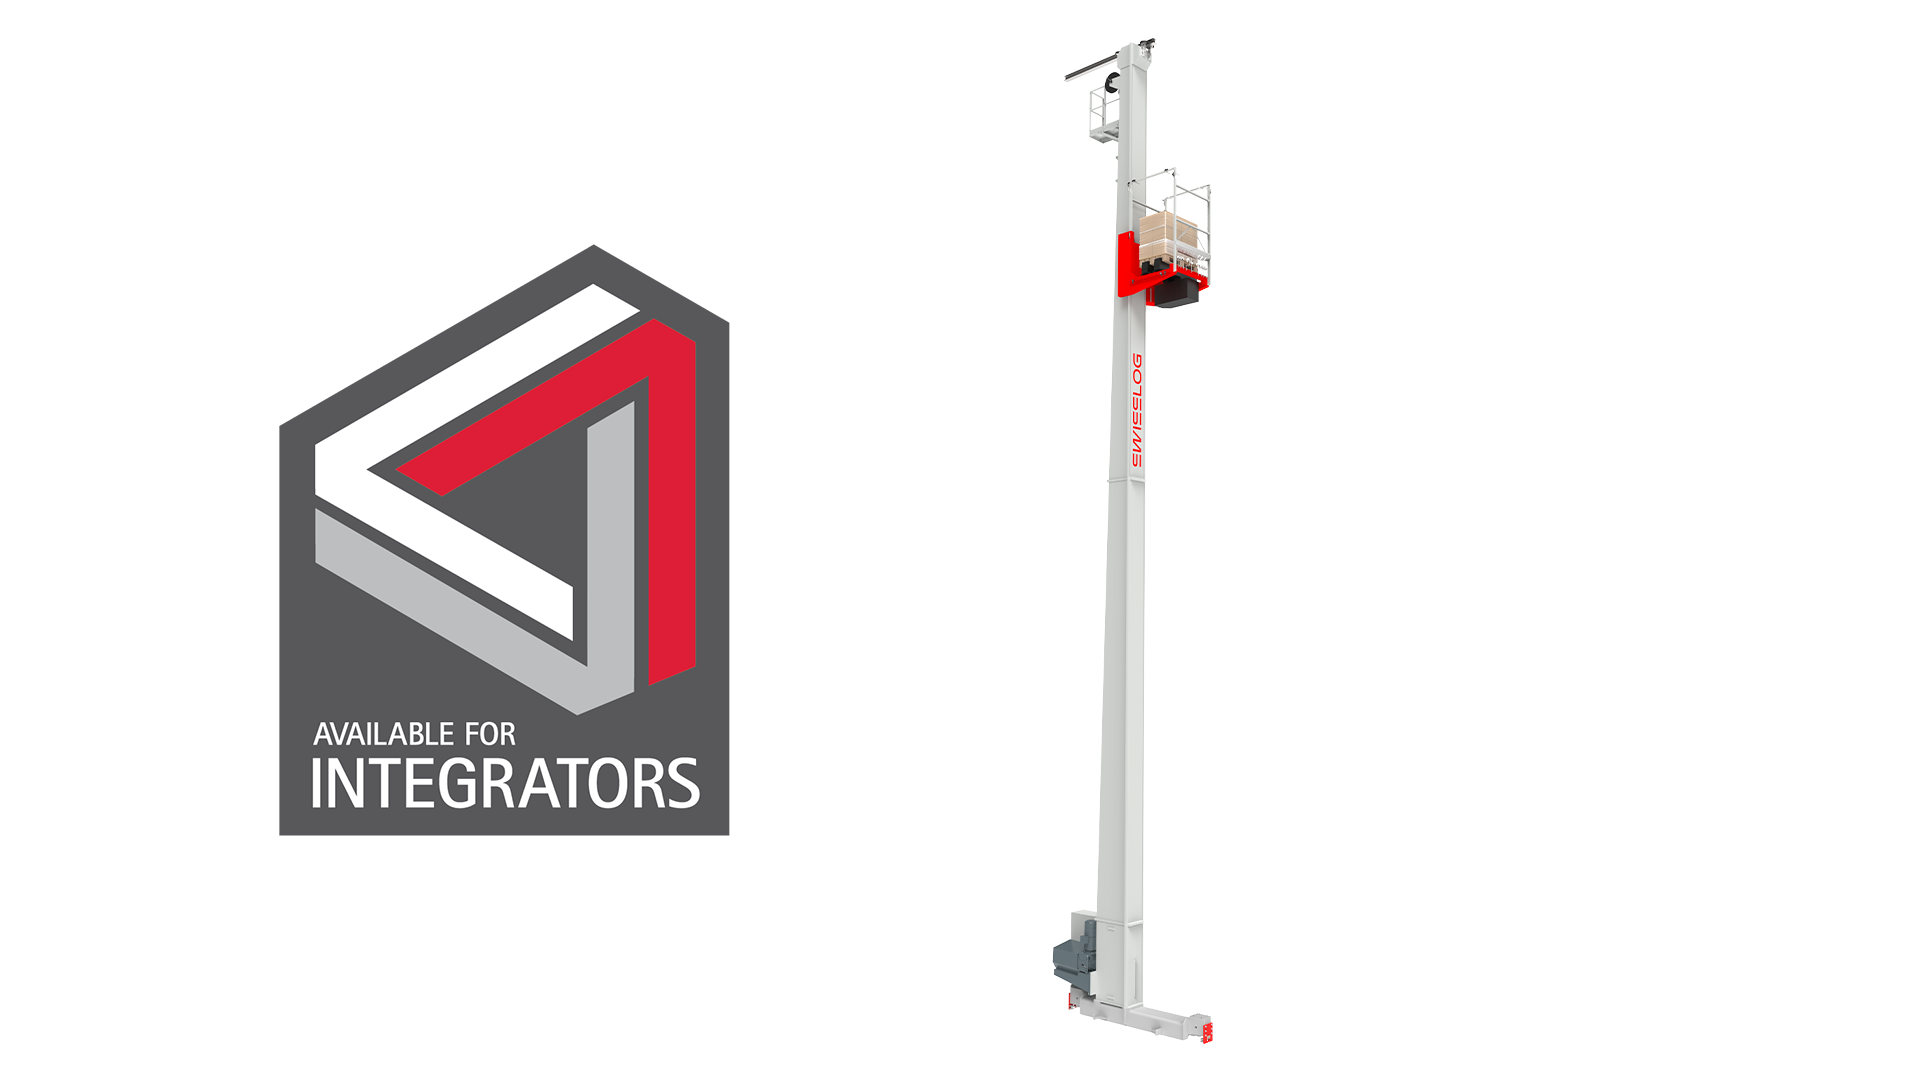 High bay warehouse crane pallet vectura for integrators